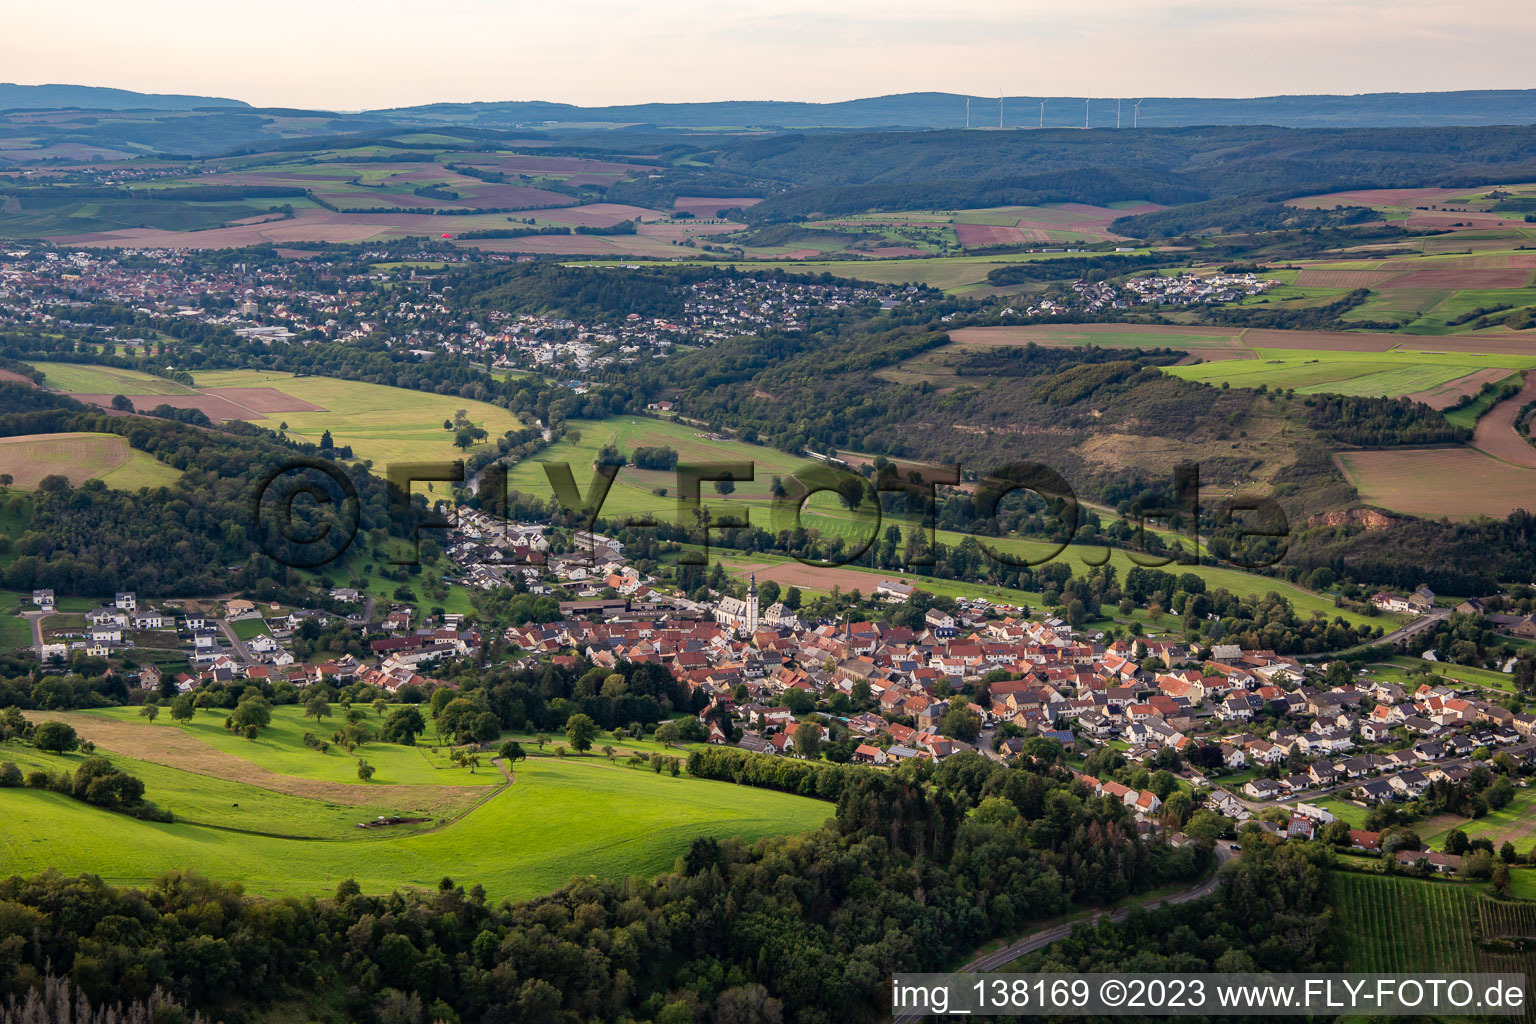 Aerial view of Staudernheim in the state Rhineland-Palatinate, Germany